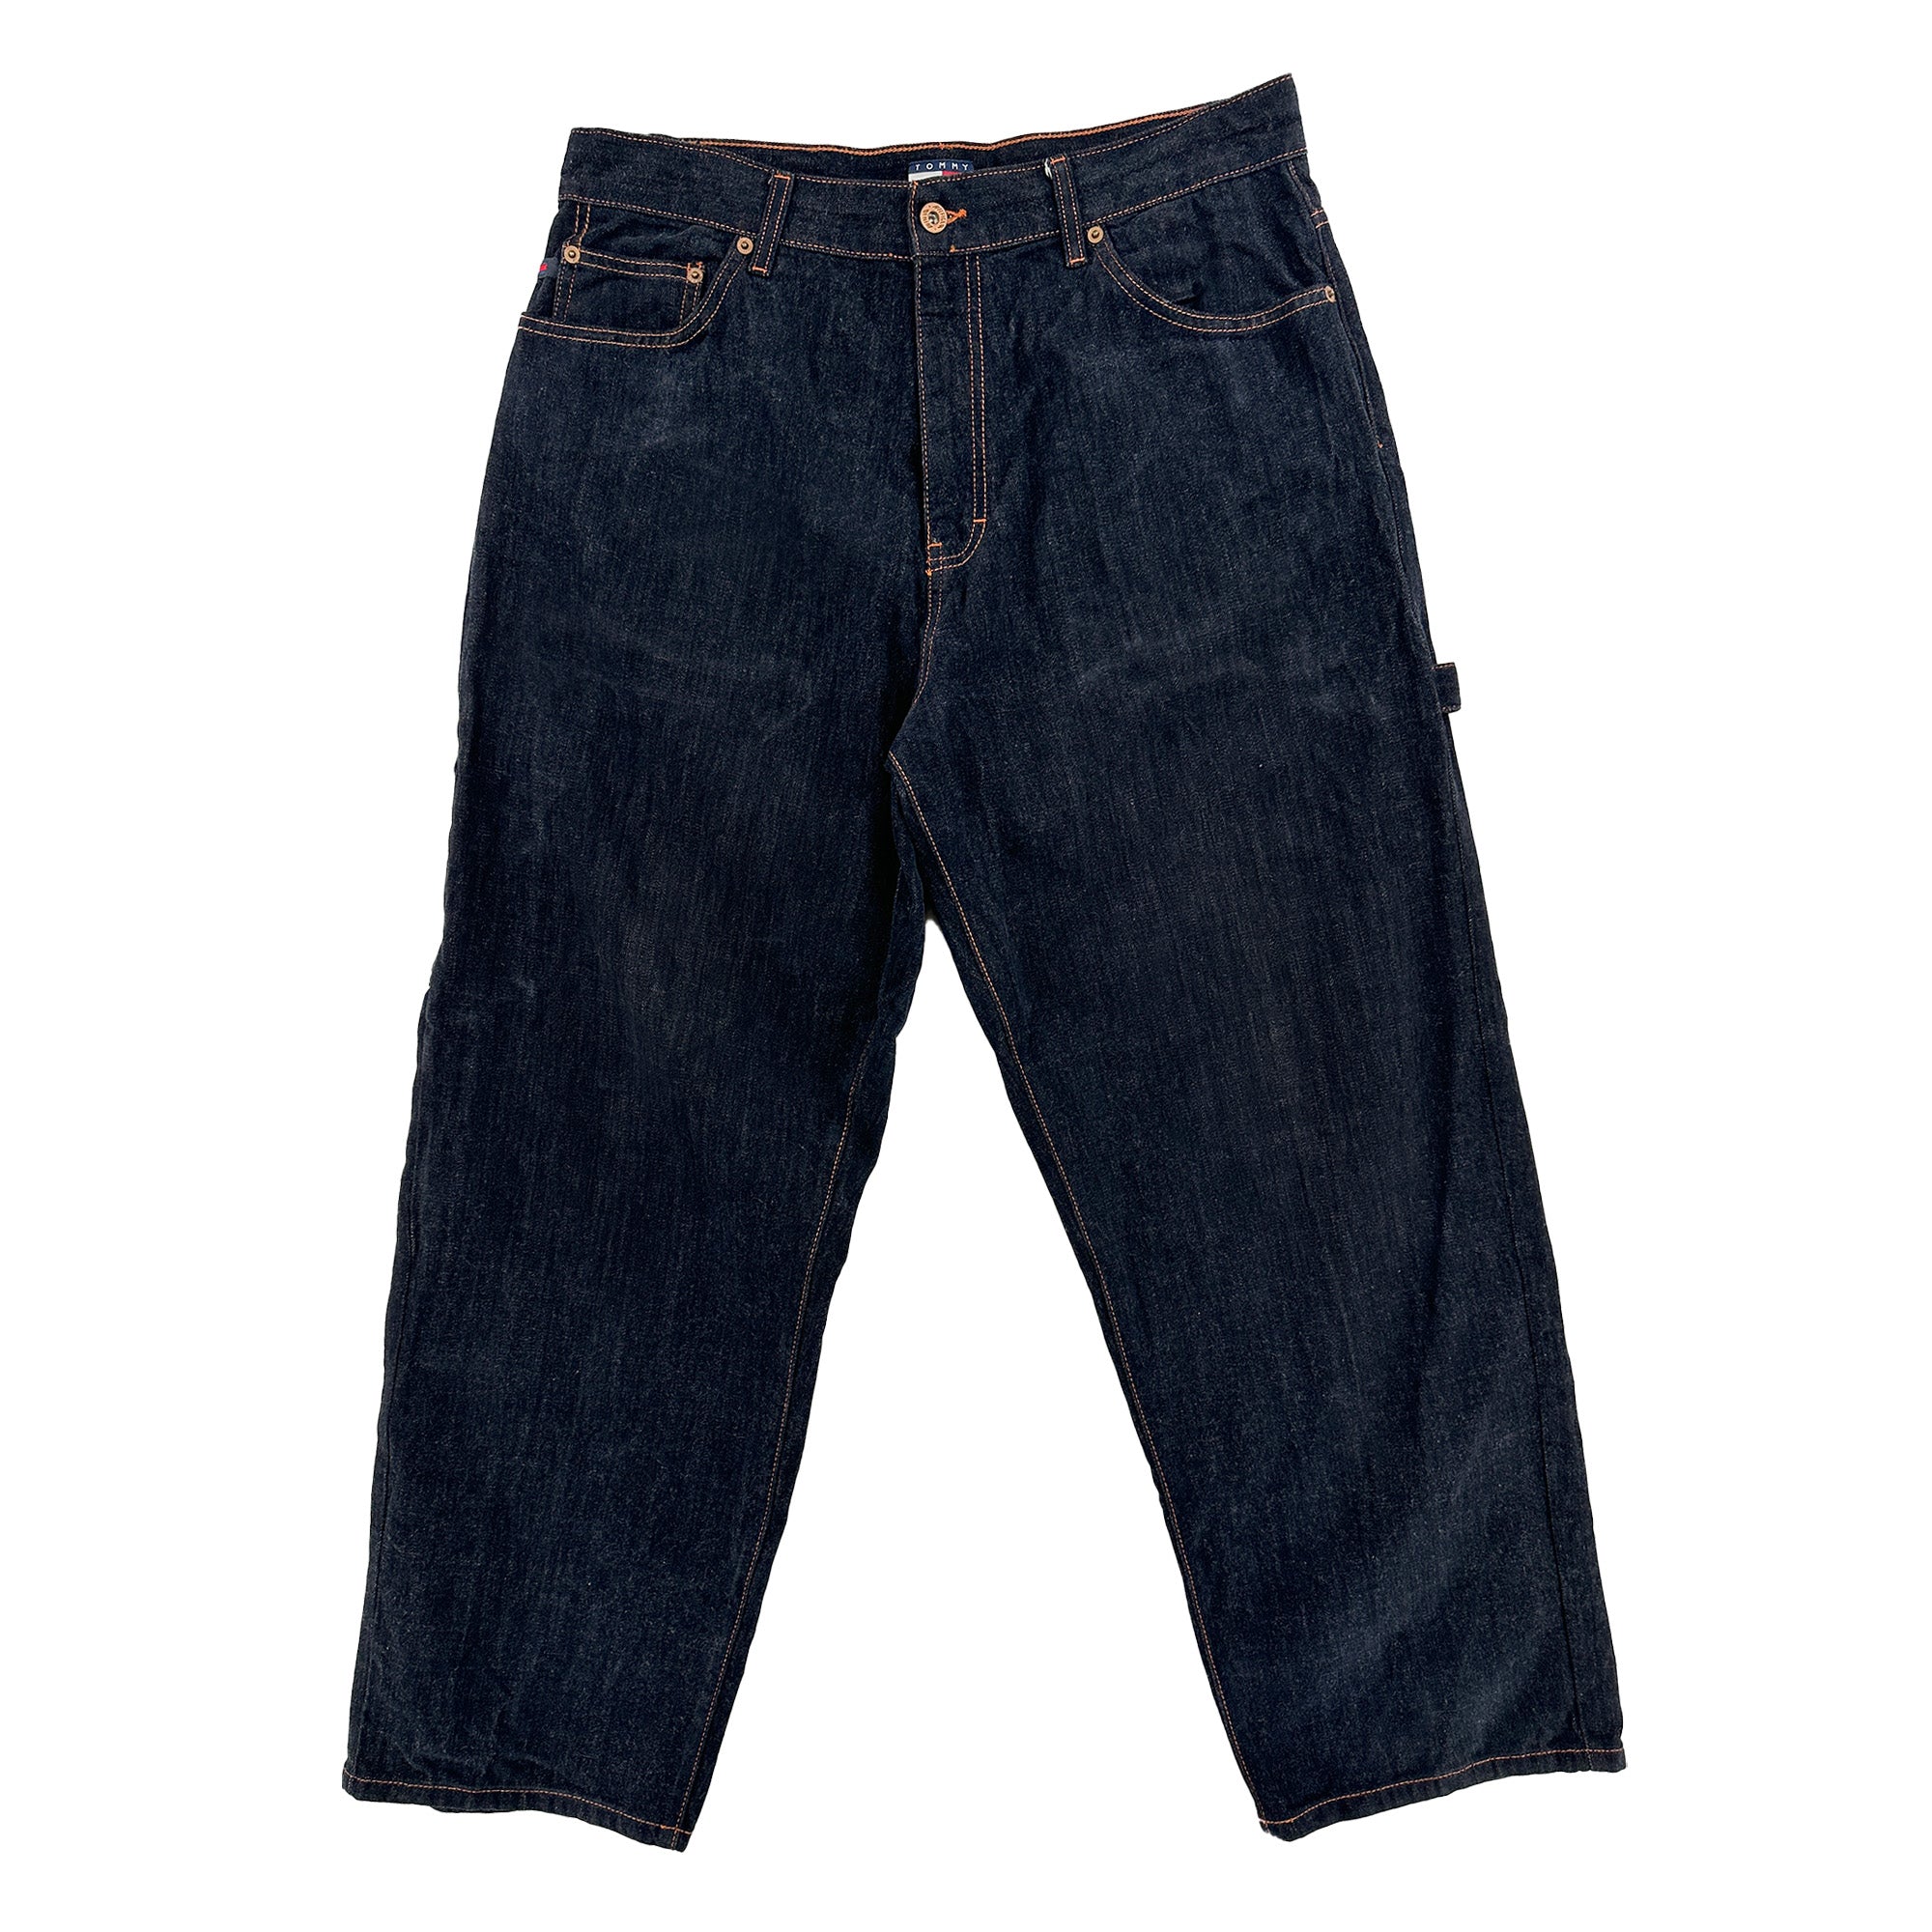 Vintage Tommy Hilfiger Jeans - Men's 34x32 Great Lakes Reclaimed Denim